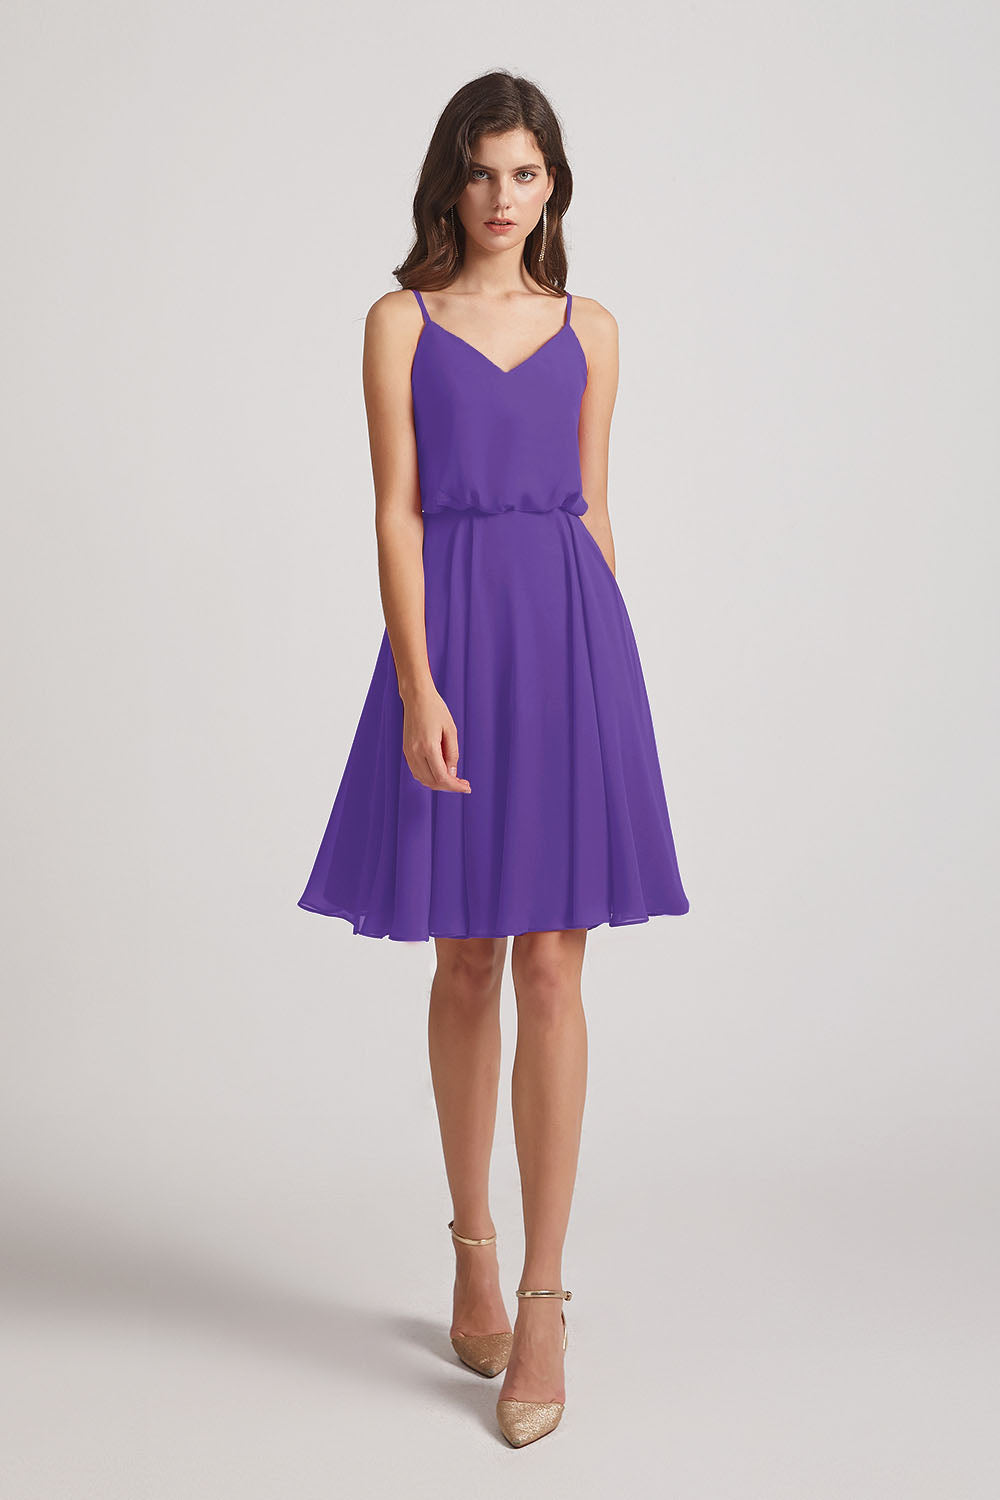 Alfa Bridal Purple Spaghetti Straps Short V-Neck Chiffon Party Dresses (AF0076)